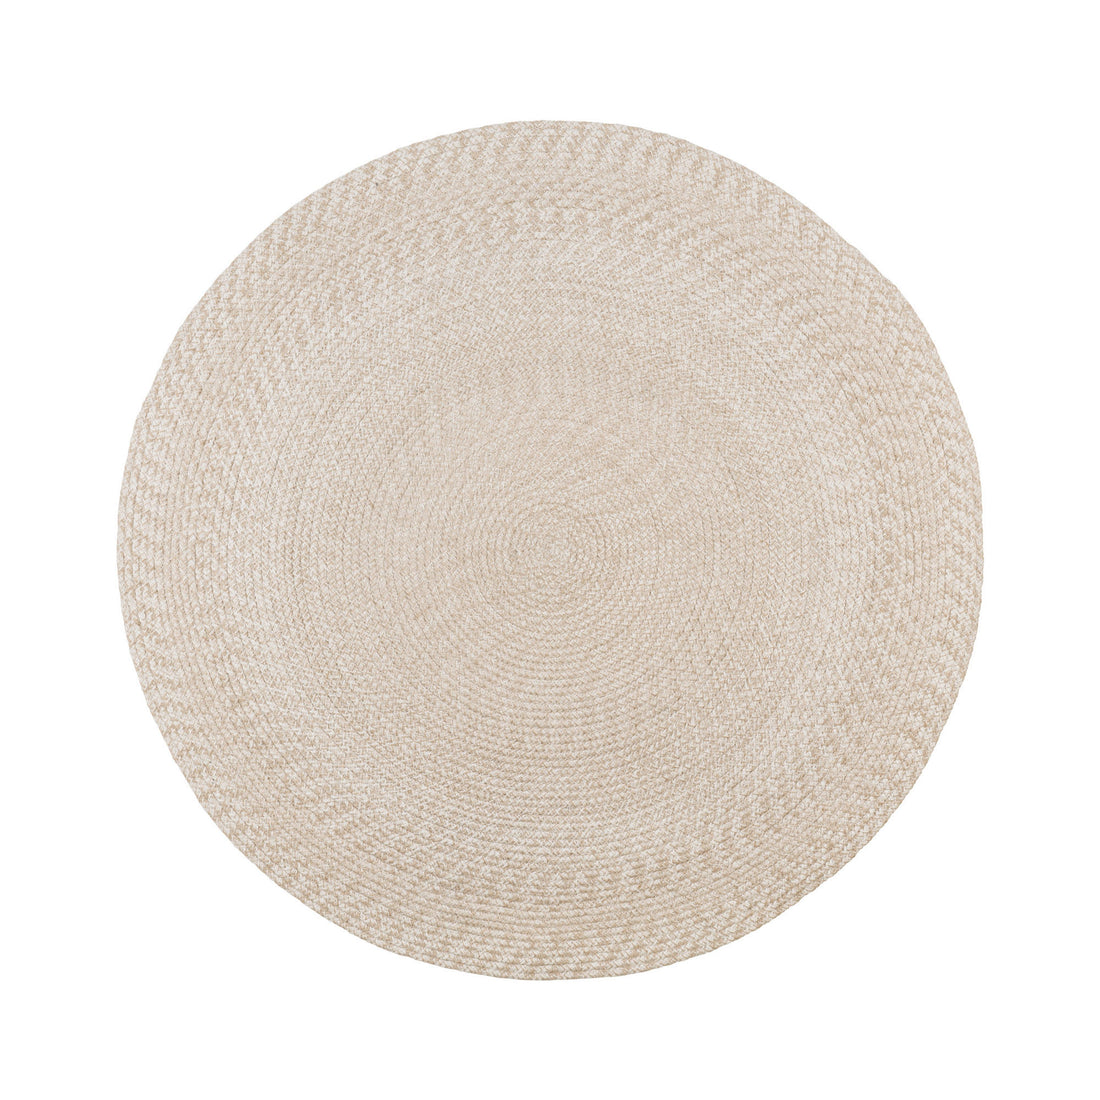 Menorca Decke - Decke in 100% recyceltem Kunststoff, Sand, Ø120 cm - 1 - PCs